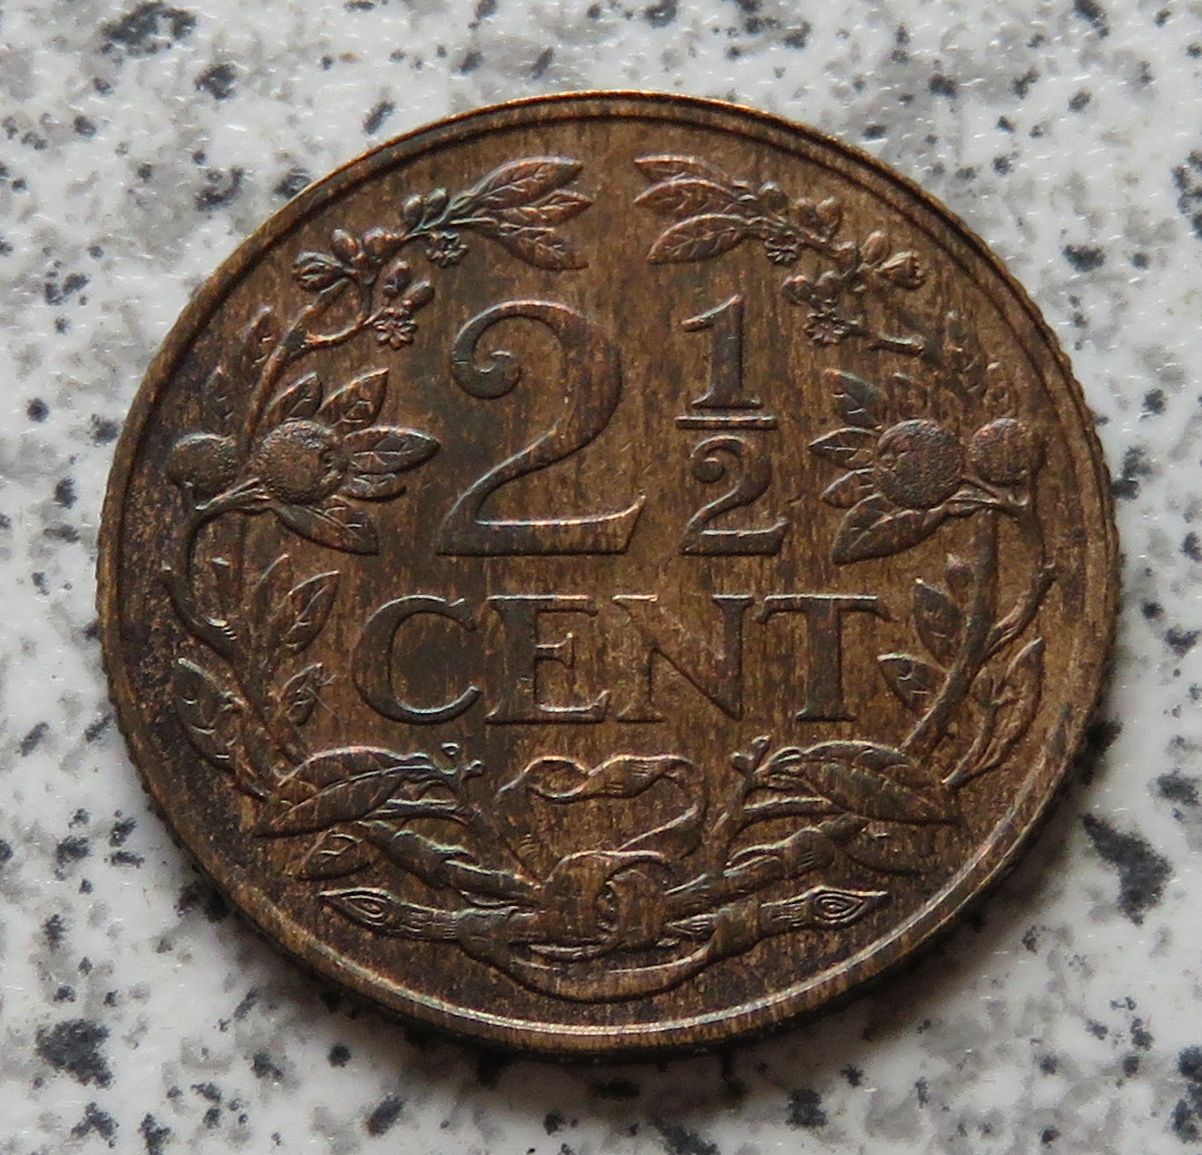  Niederlande 2,5 Cent 1916 / 2 1/2 Cent 1916, Erhaltung   